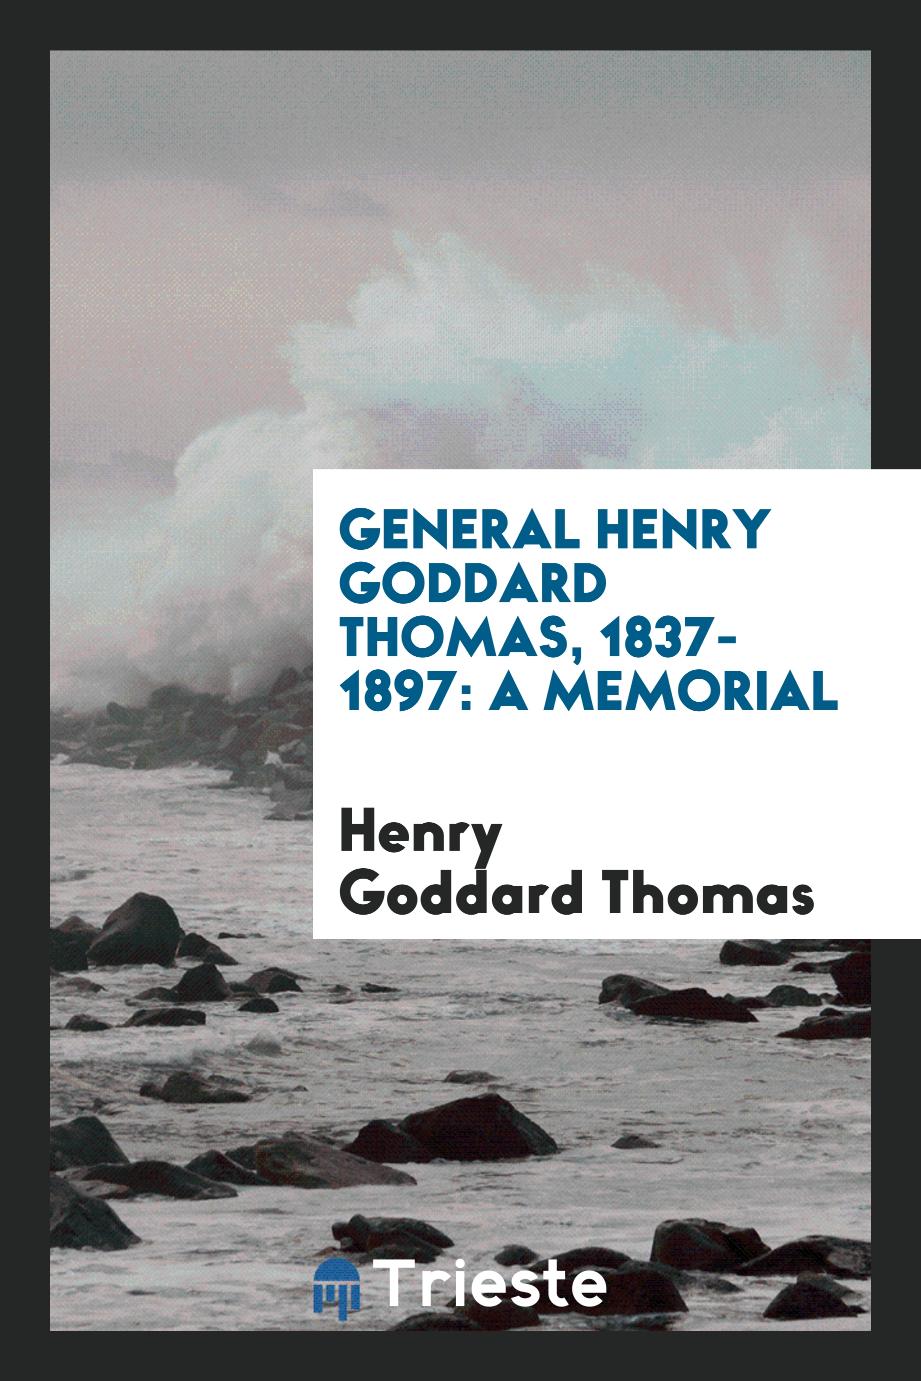 Henry Goddard Thomas - General Henry Goddard Thomas, 1837-1897: a memorial